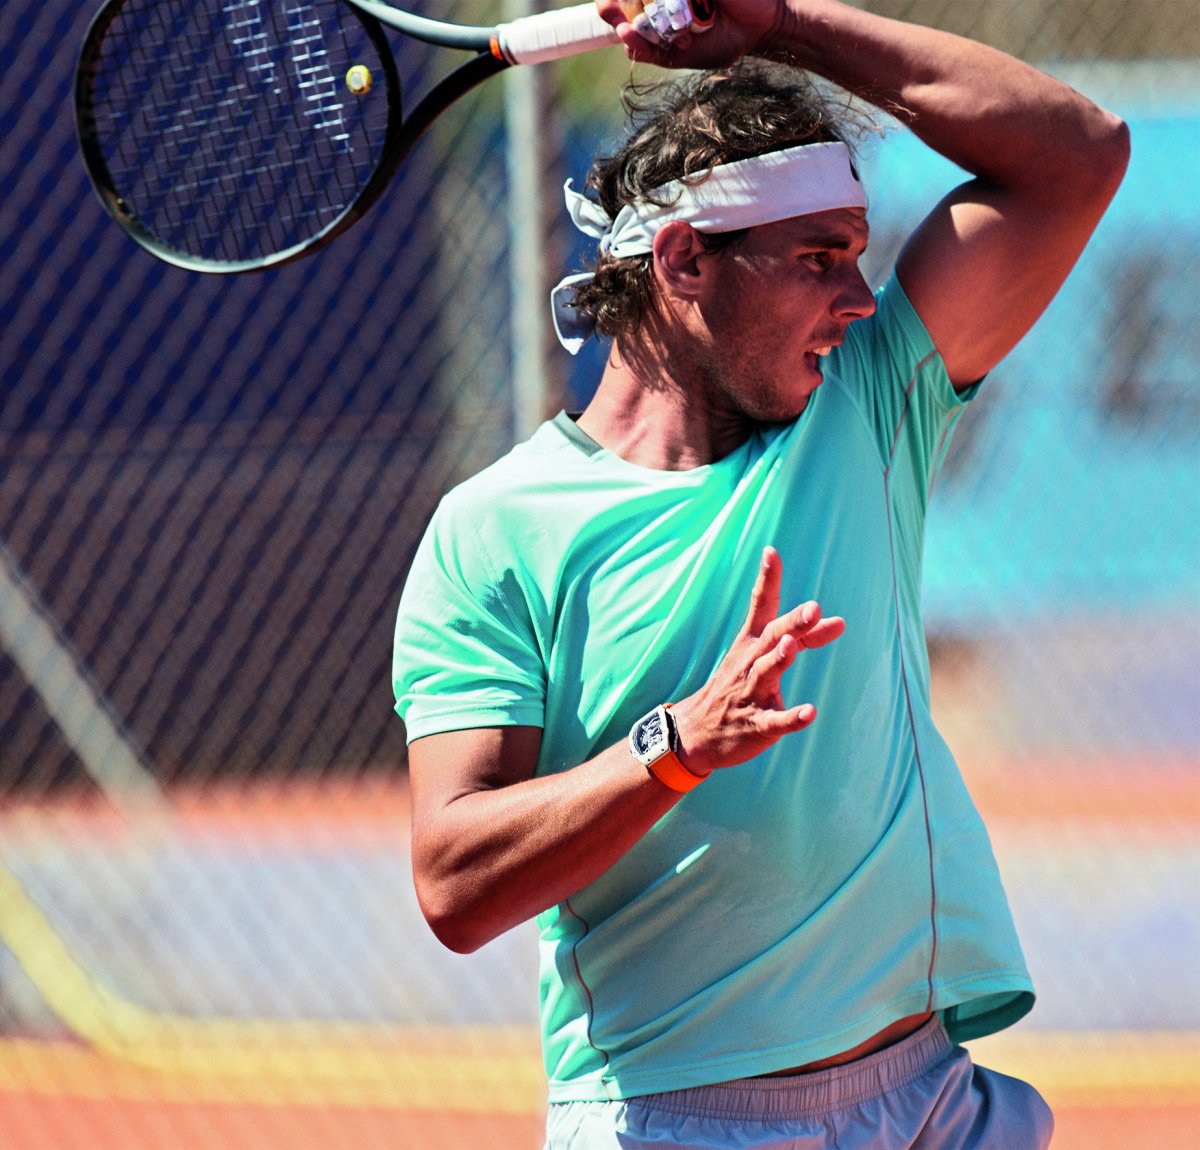 New Richard Mille RM 27-02 Rafael Nadal Watch 2015 Court